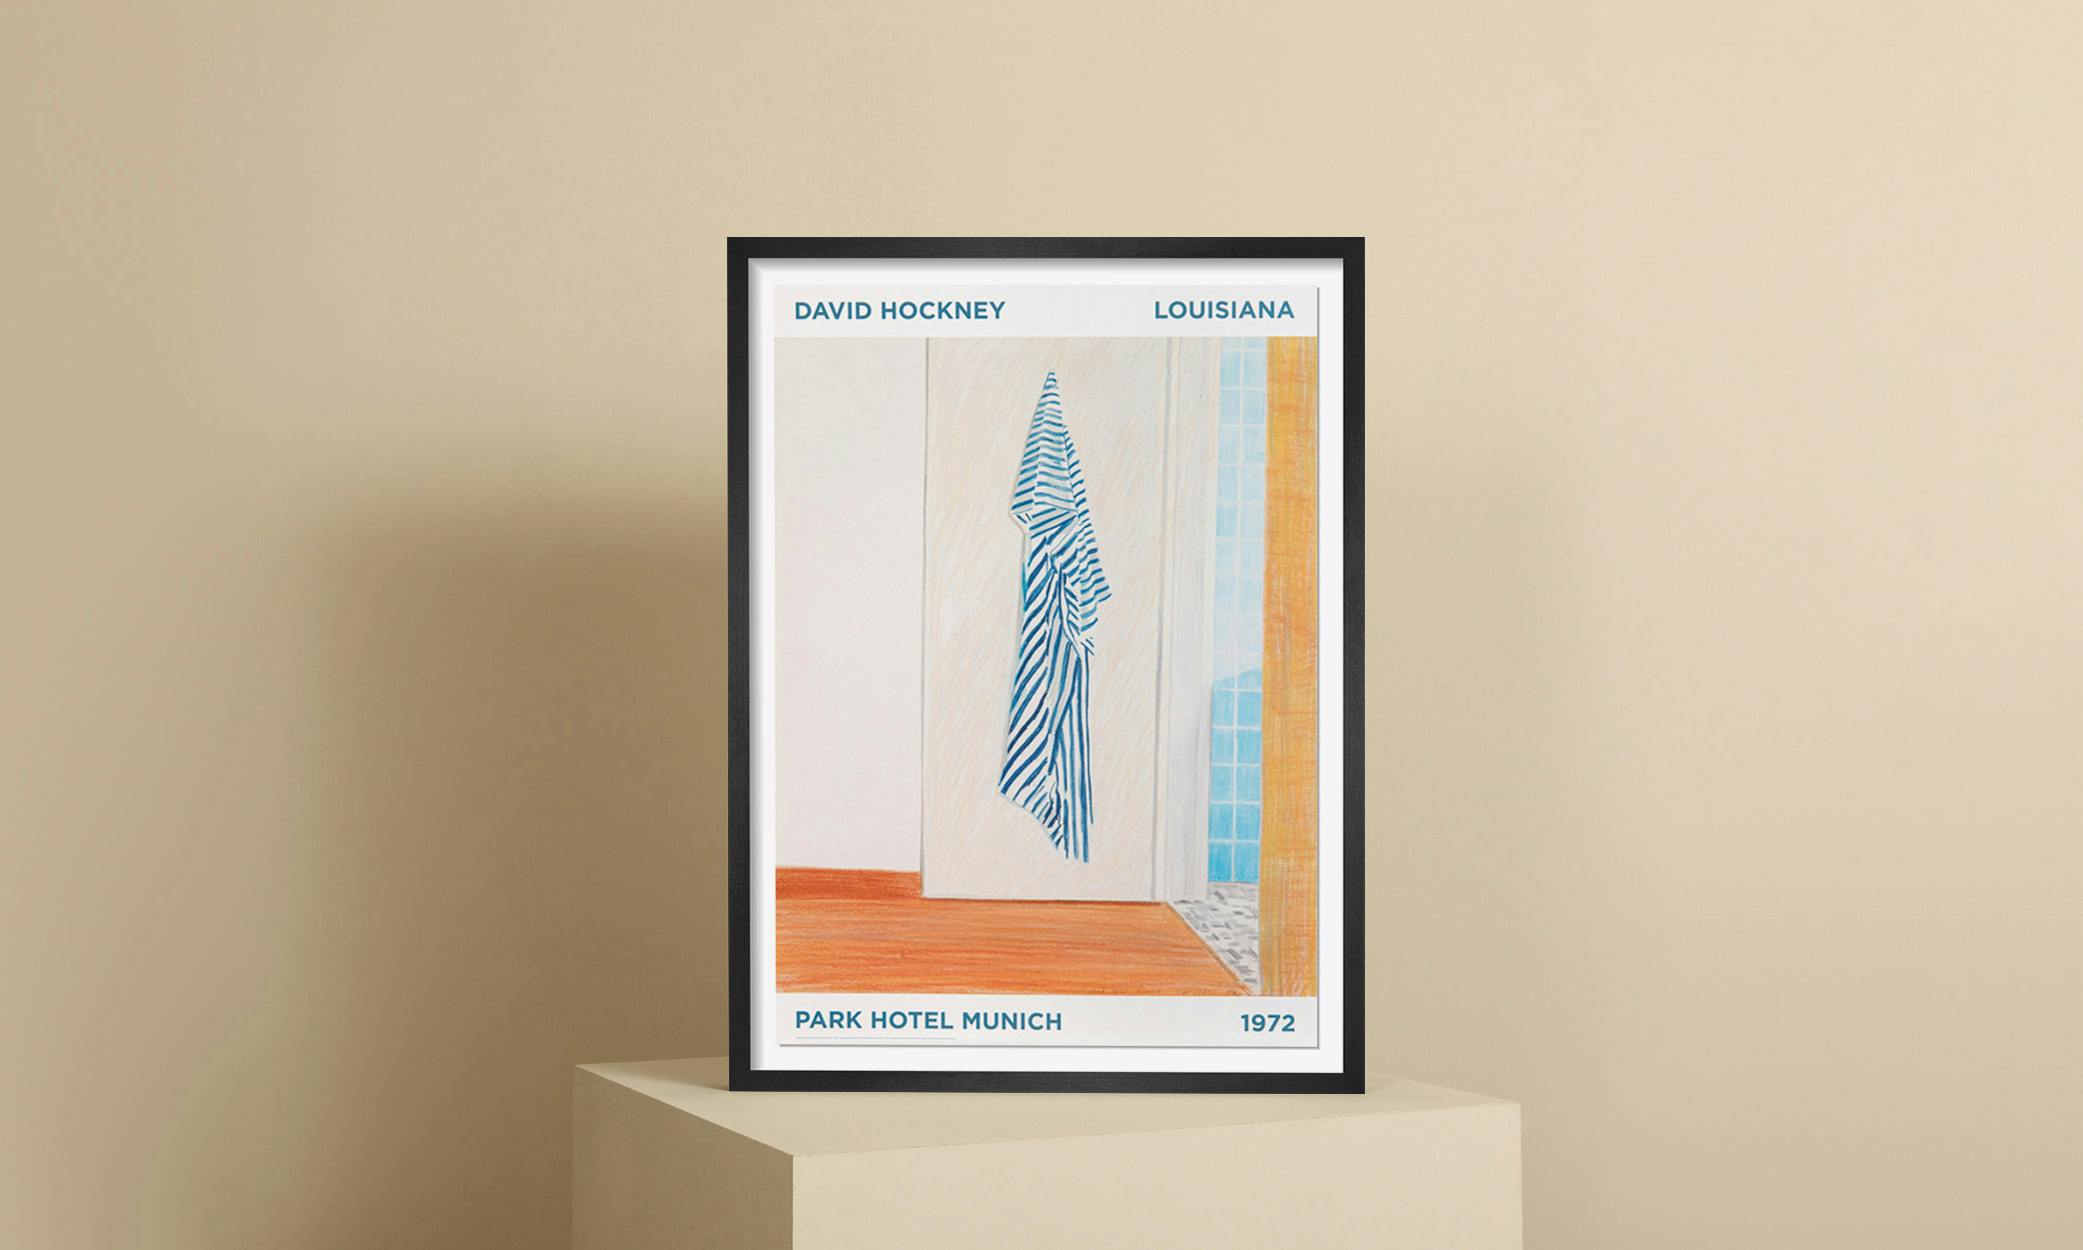 David Hockney’s exhibition posters